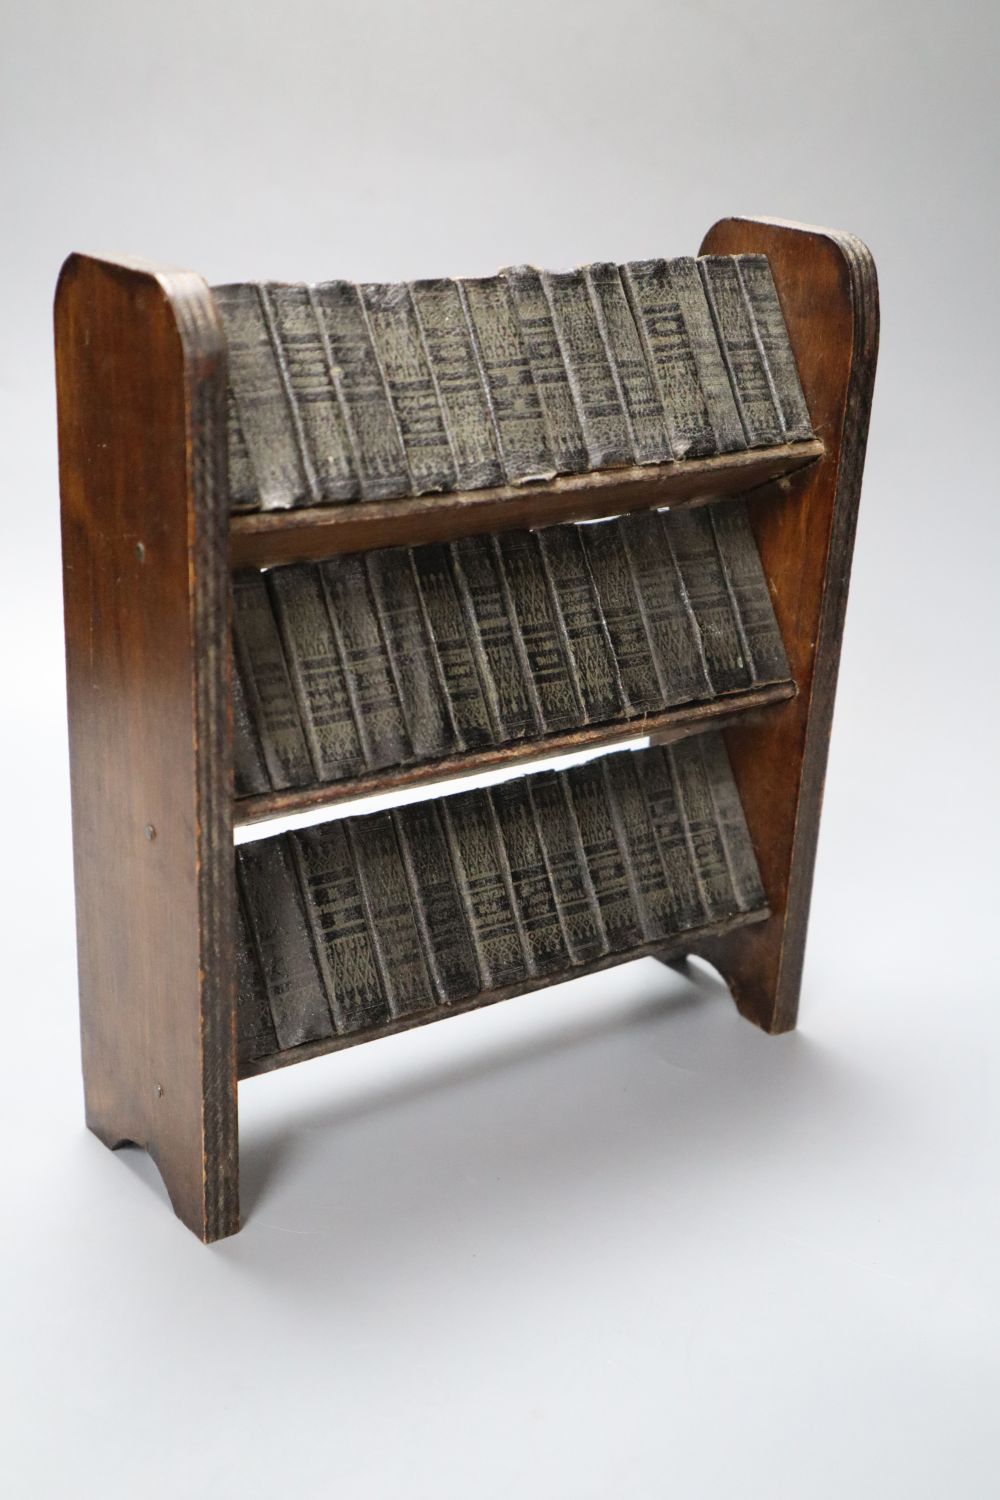 Shakespeares Works in miniature, 40 volumes on original three-shelf open bookcase, 20cm wide